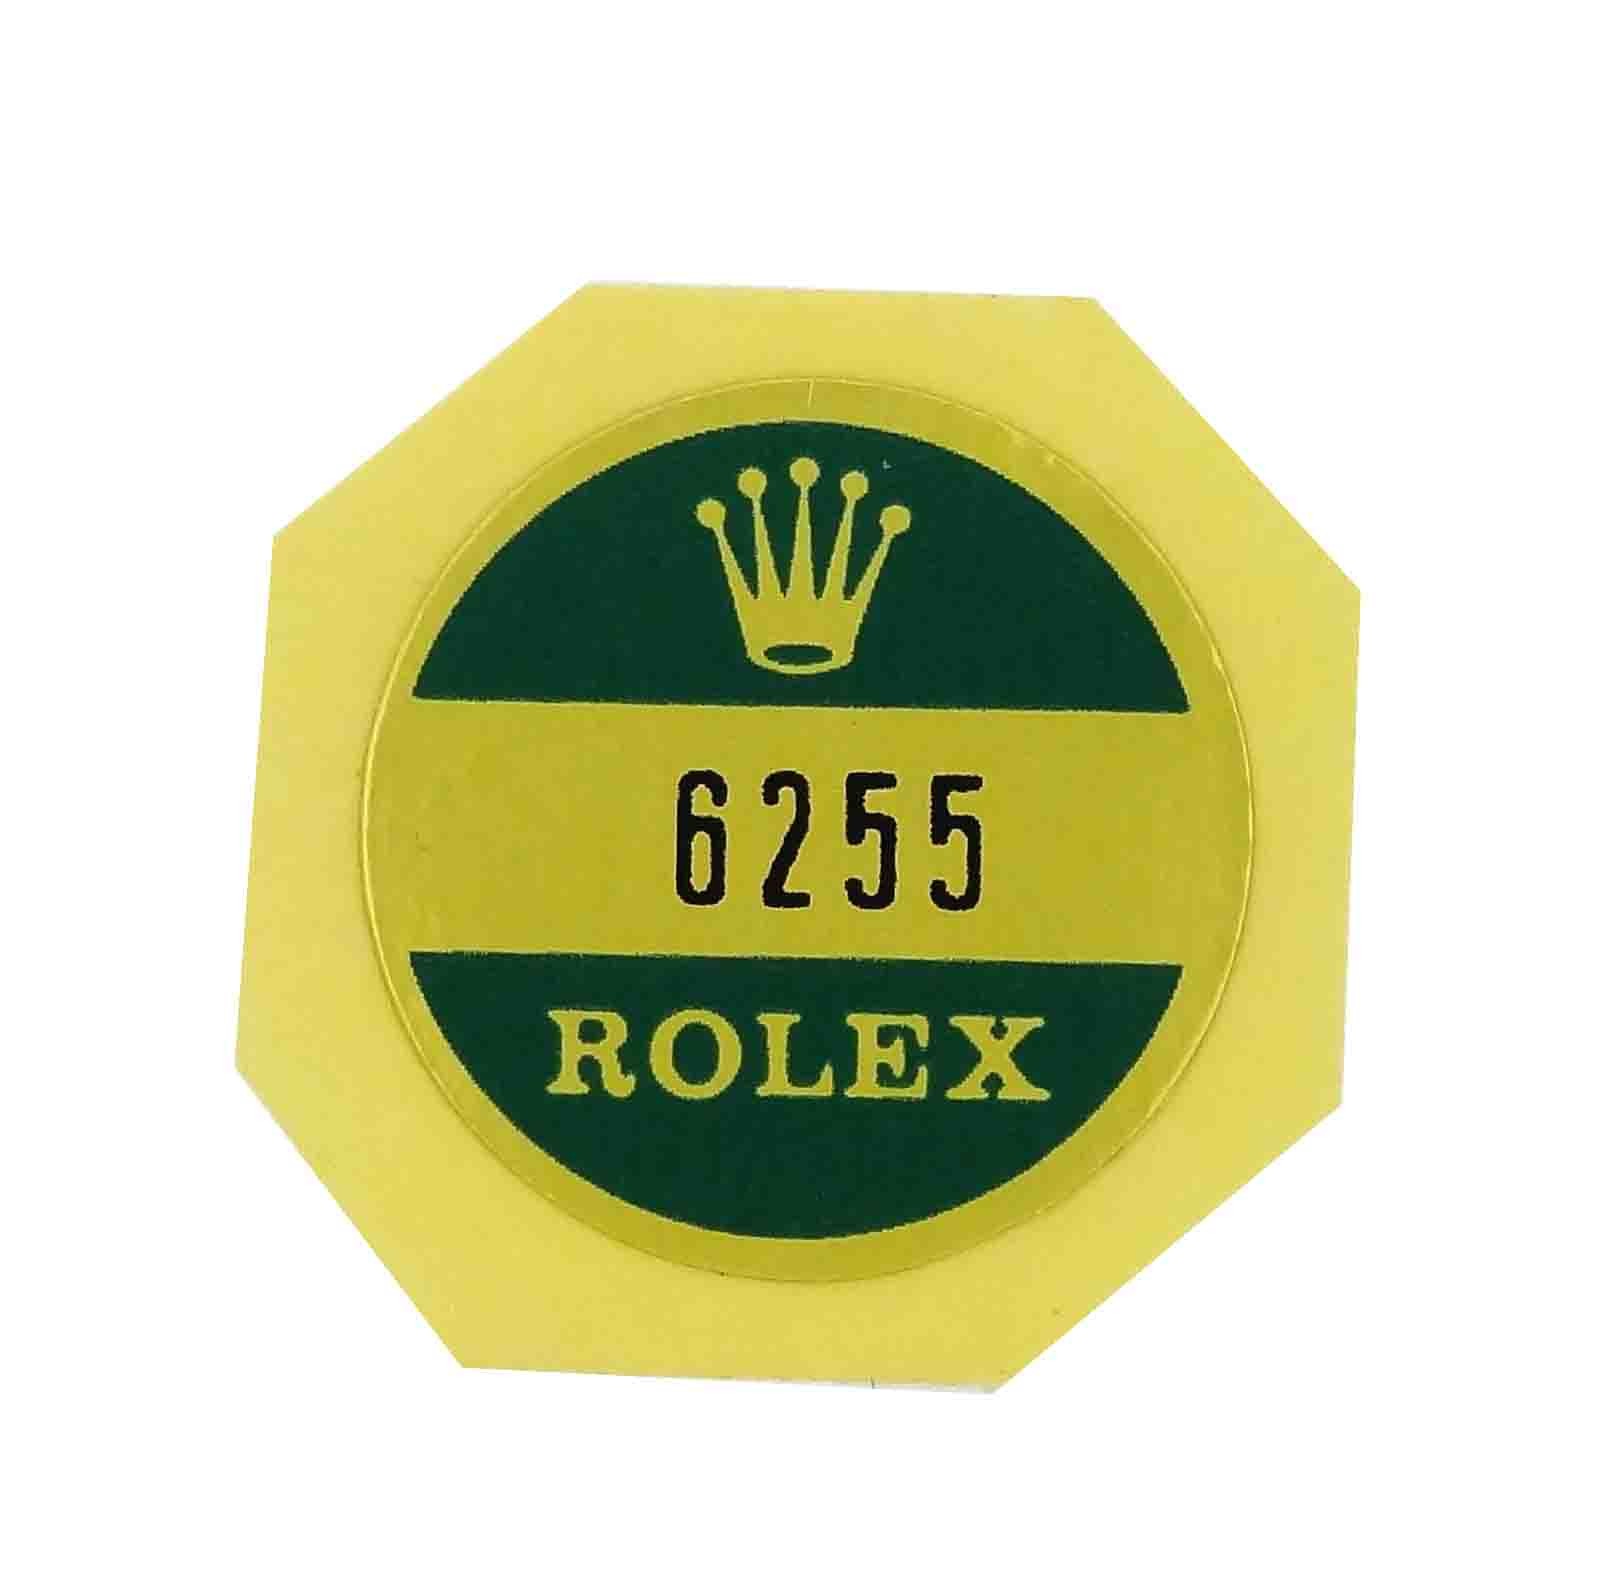 rolex sticker on back